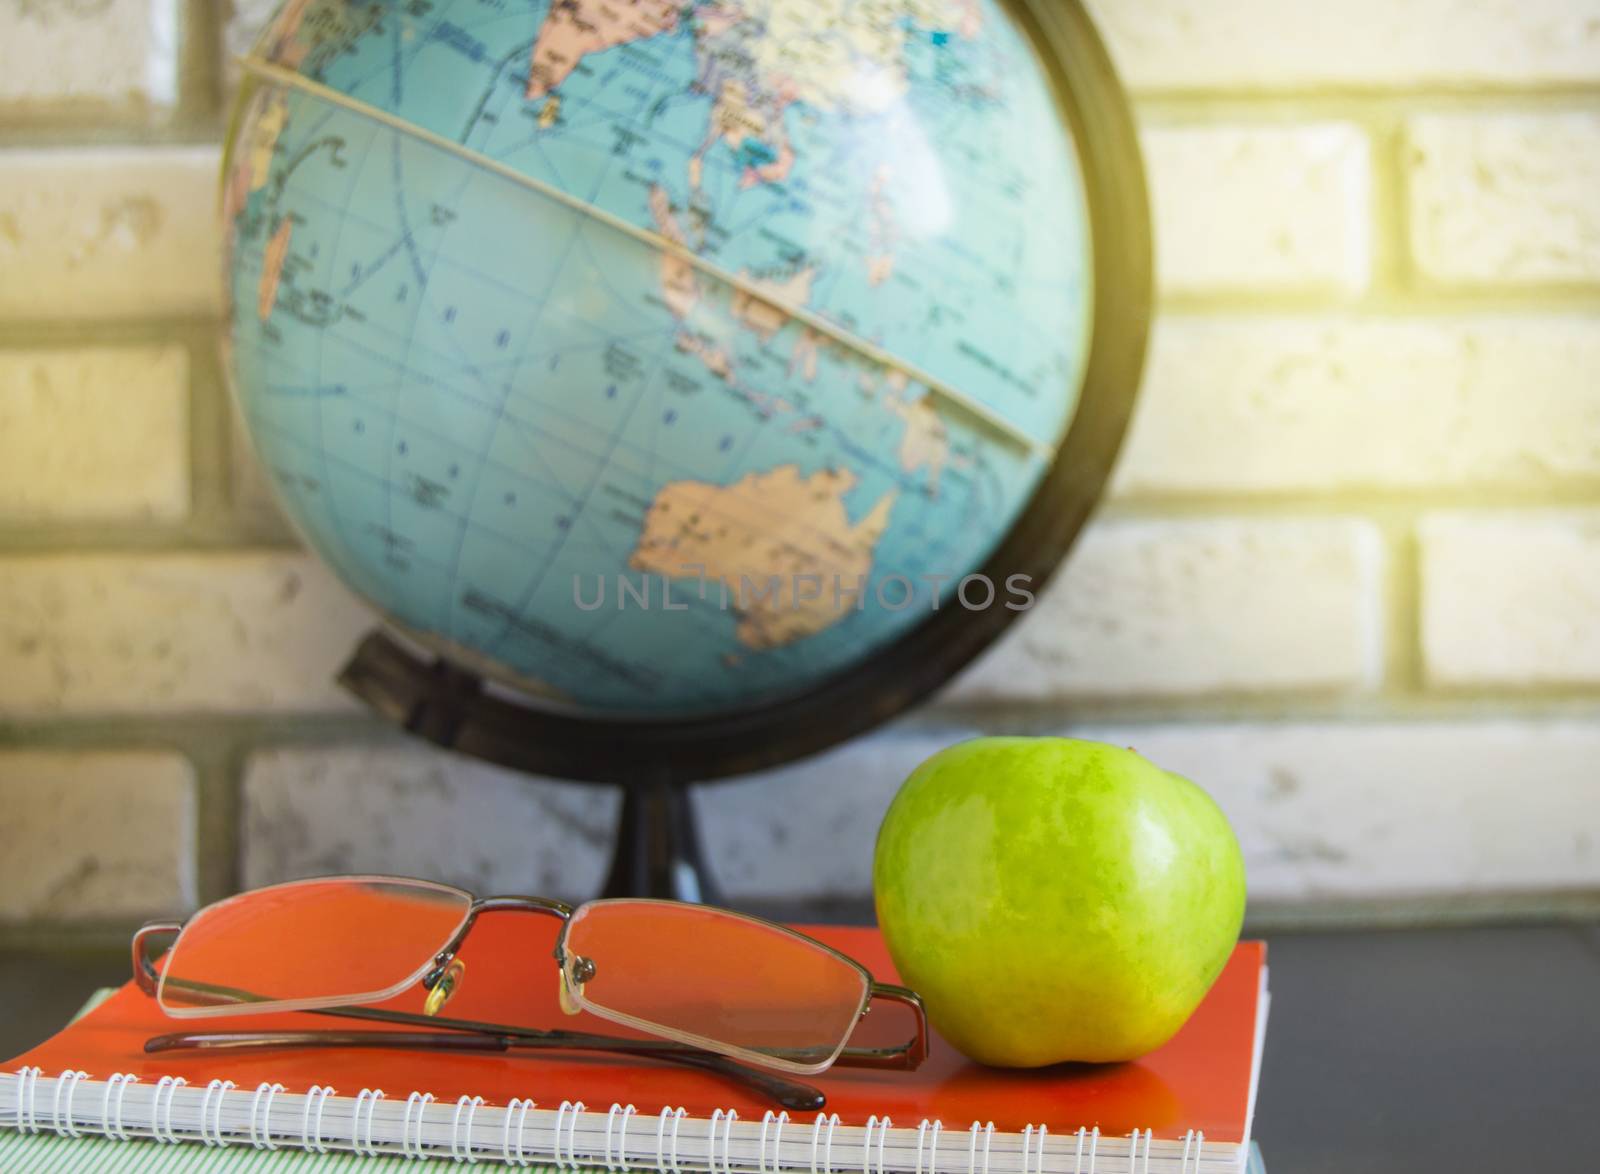 World teacher Day at school. Still life with books, globe, Apple, glasses sunlight.